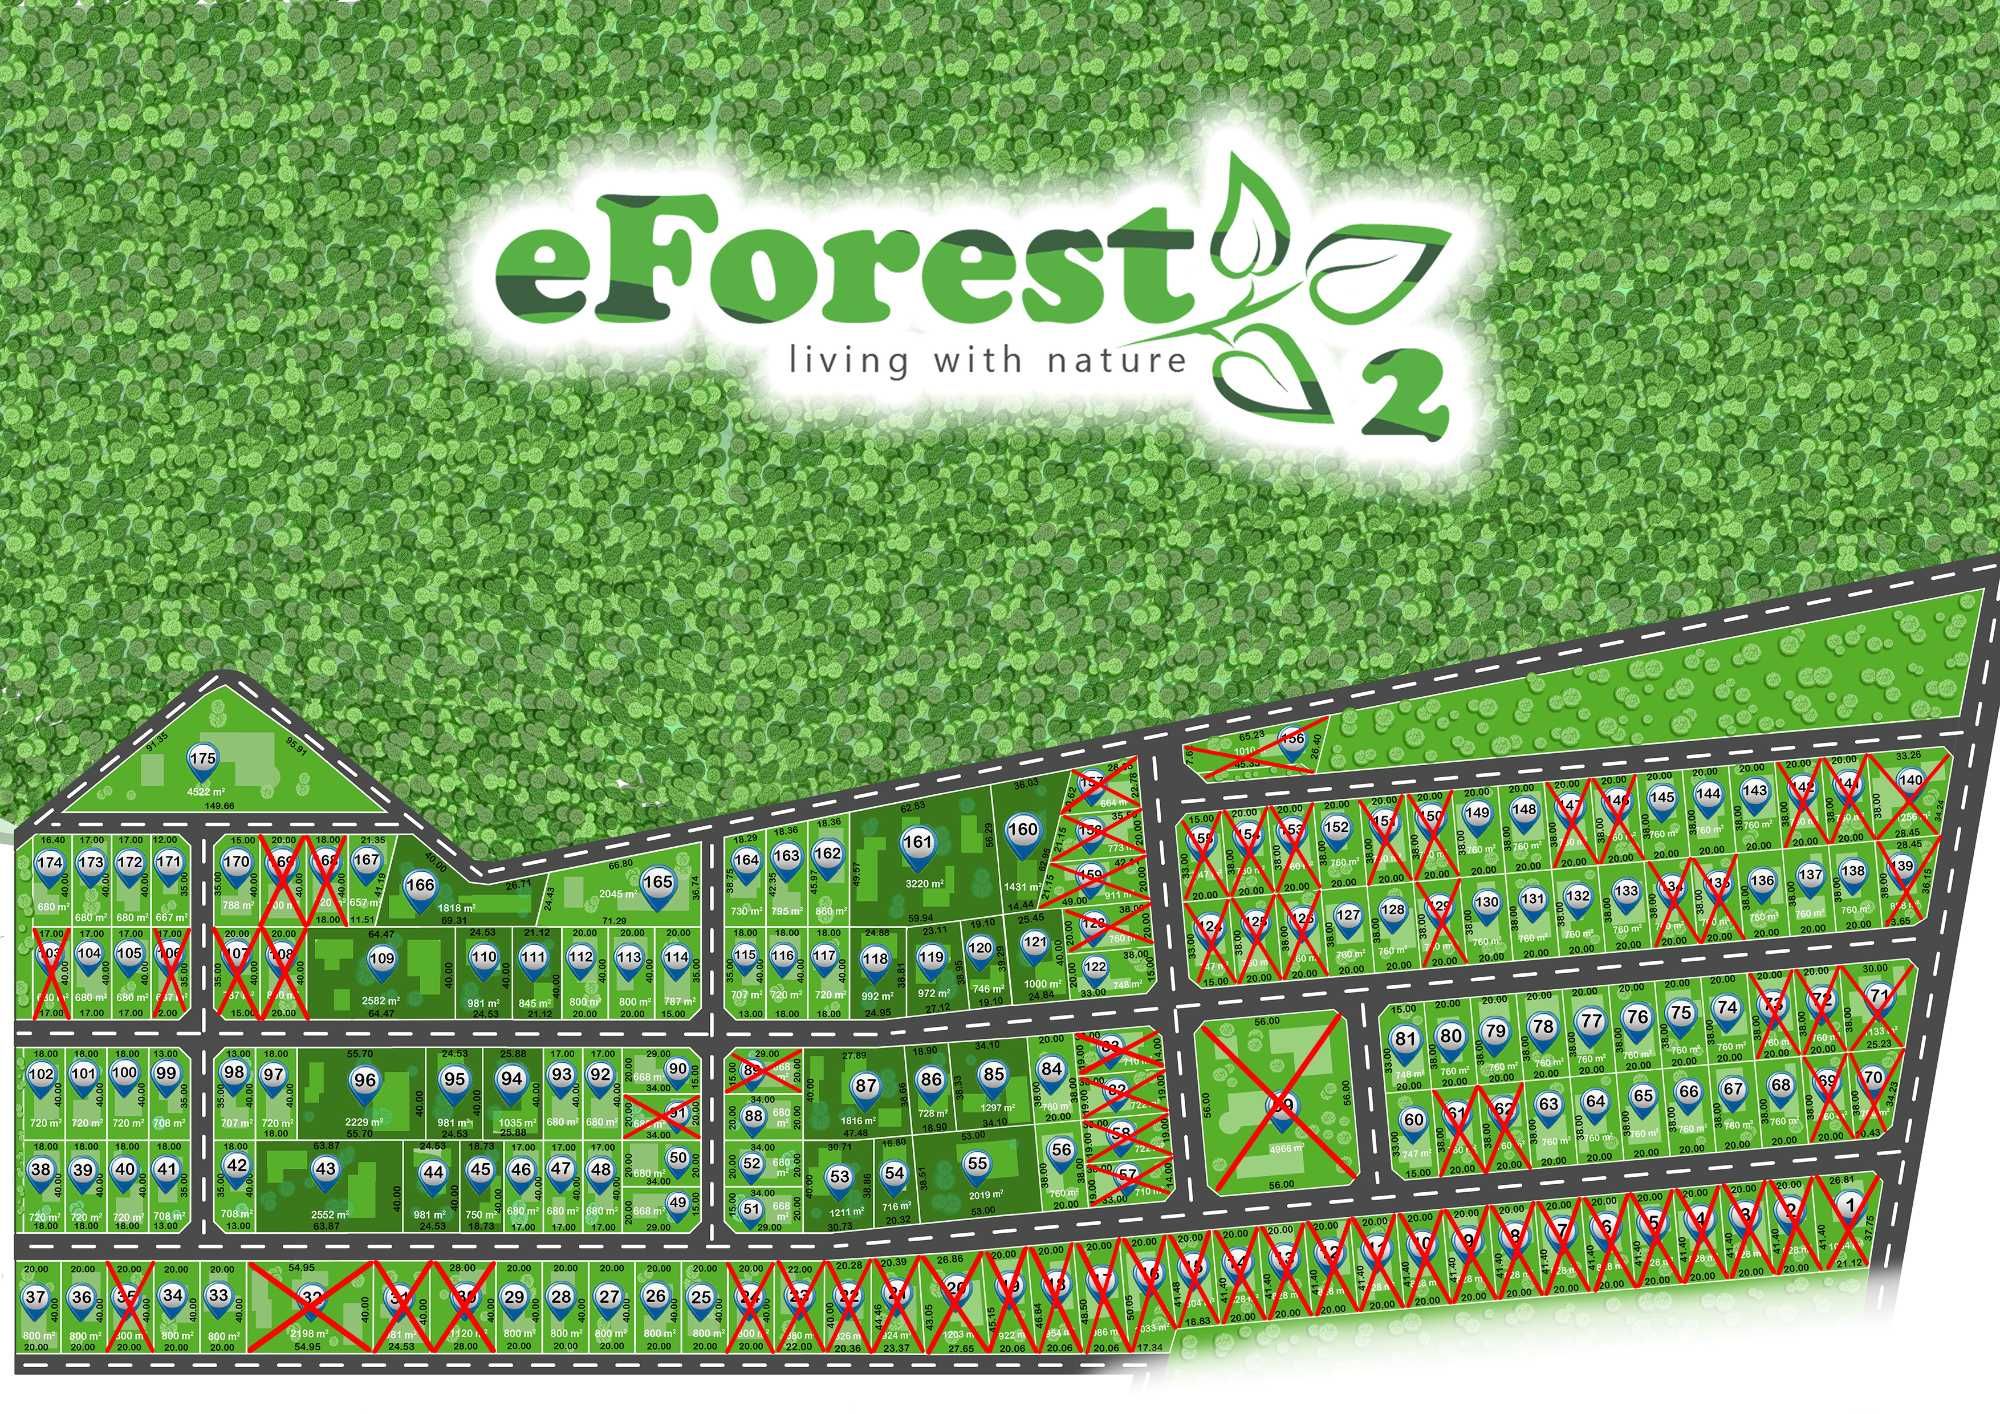 eForest 2 , loturi de teren, direct din DN1A